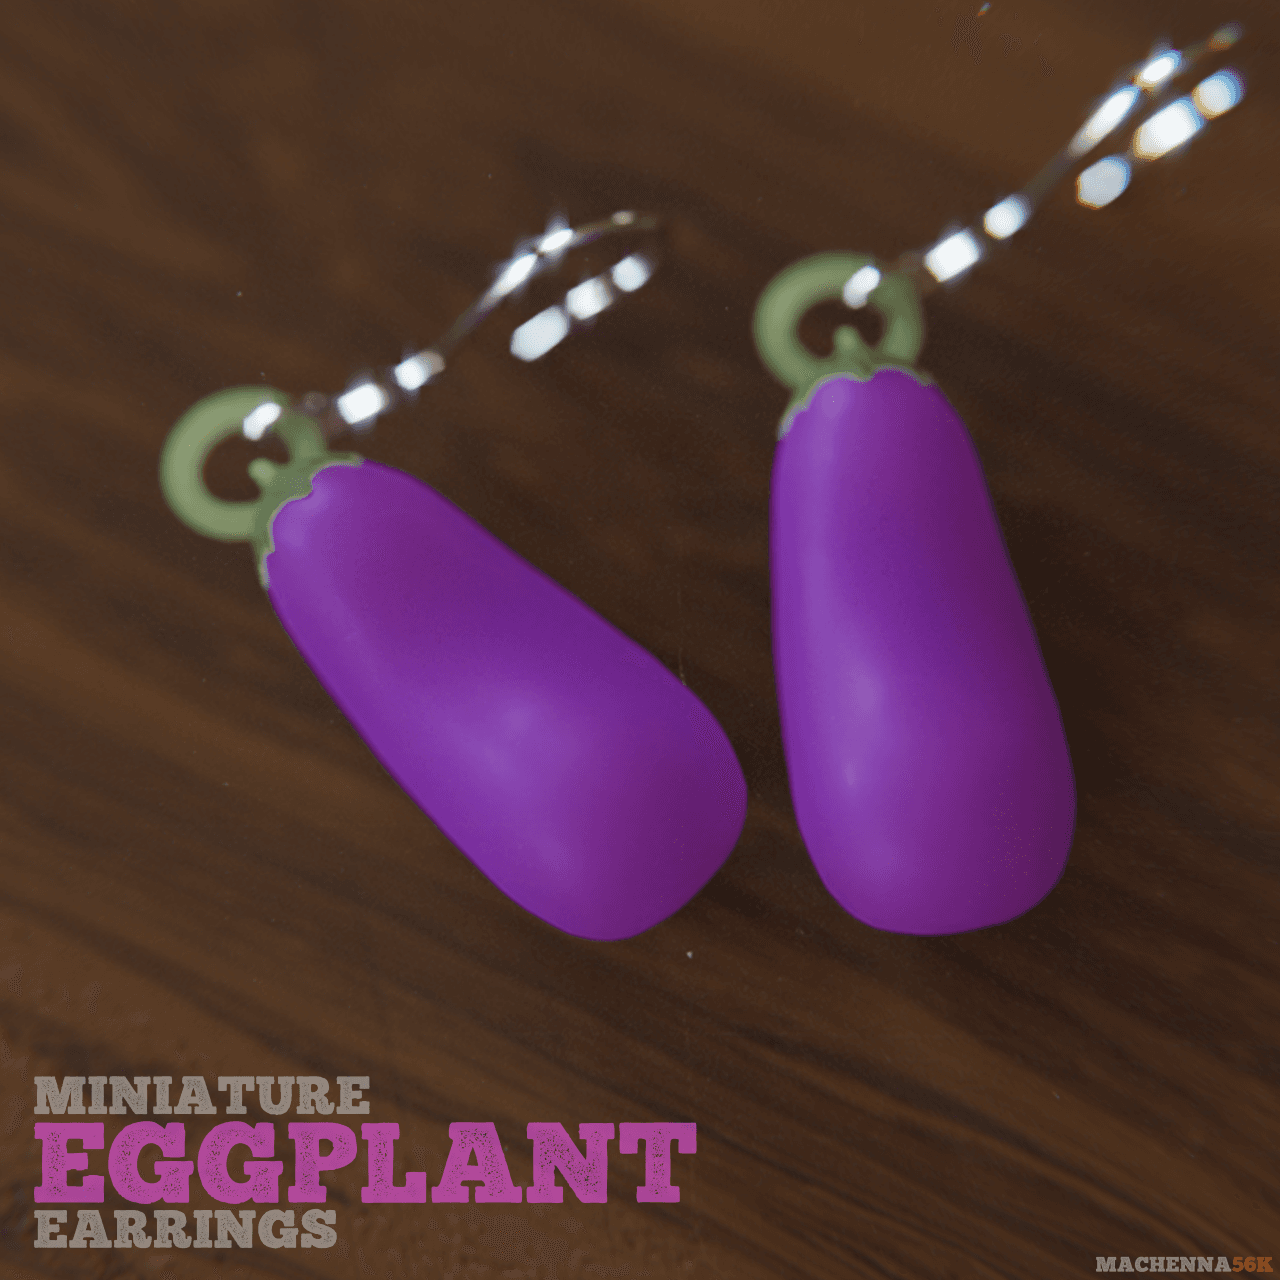 Miniature Eggplant Earrings 3d model